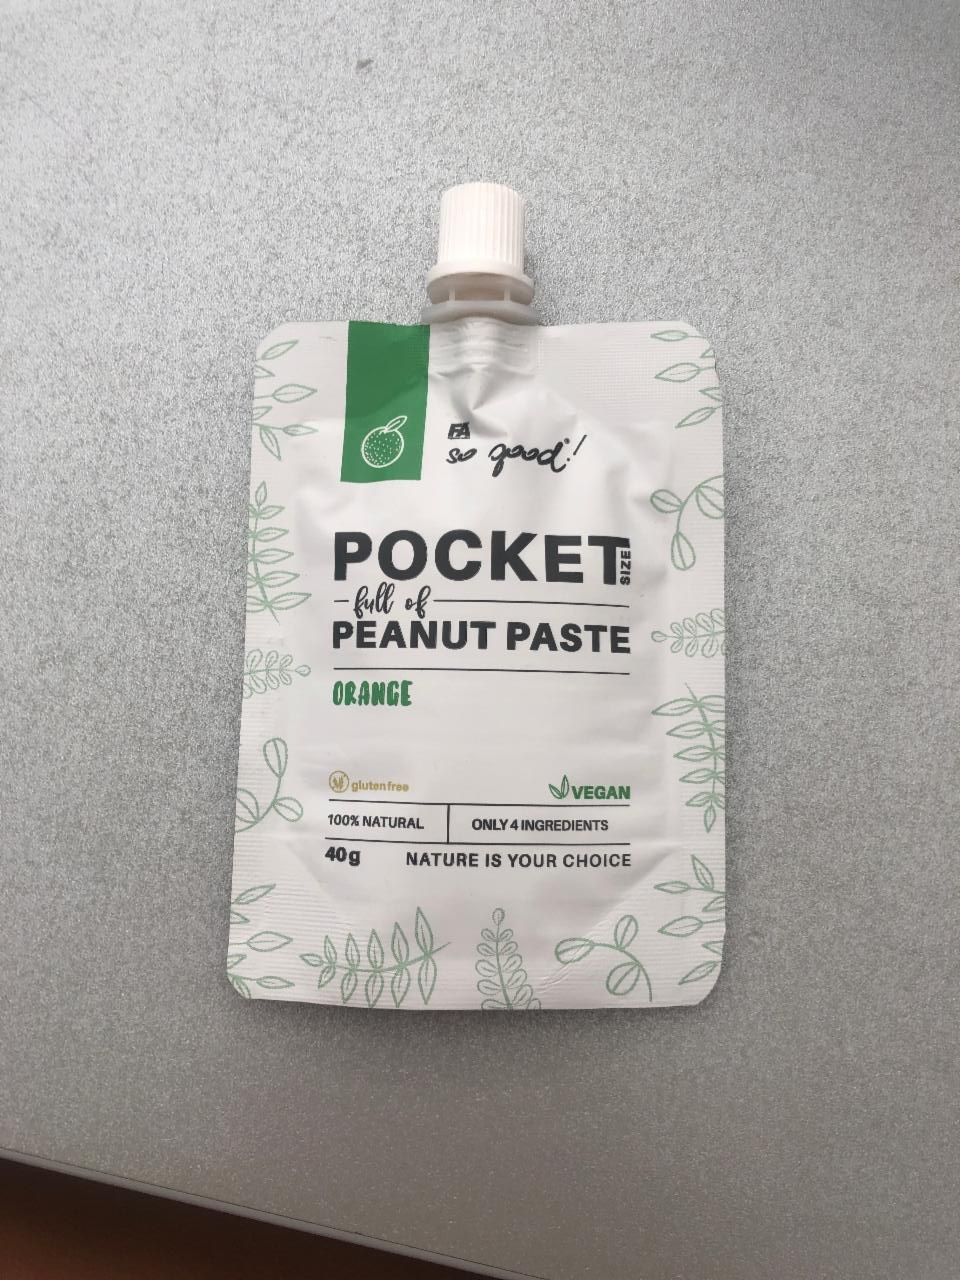 Fotografie - pocket full of peanut paste